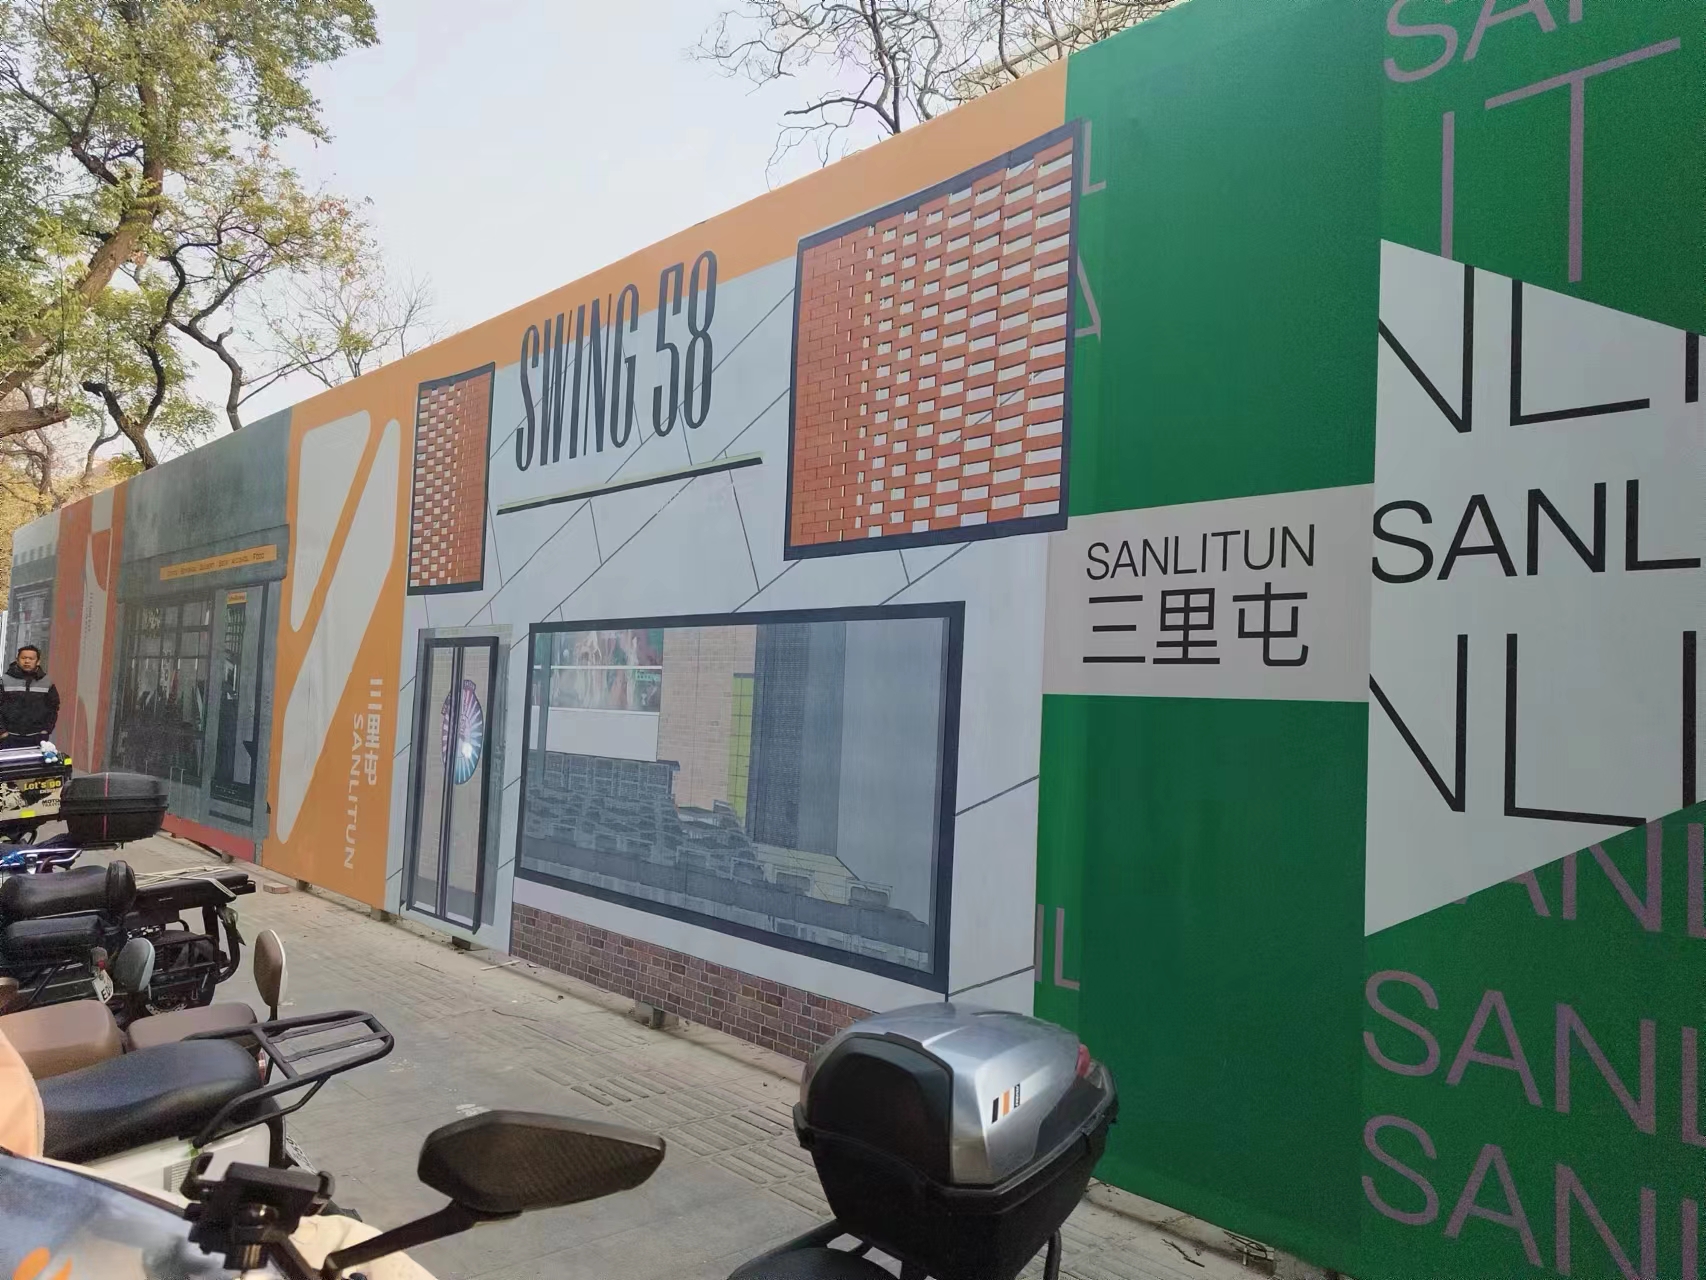 Bar Street No More? Sanlitun Strip Gets an Upgrade